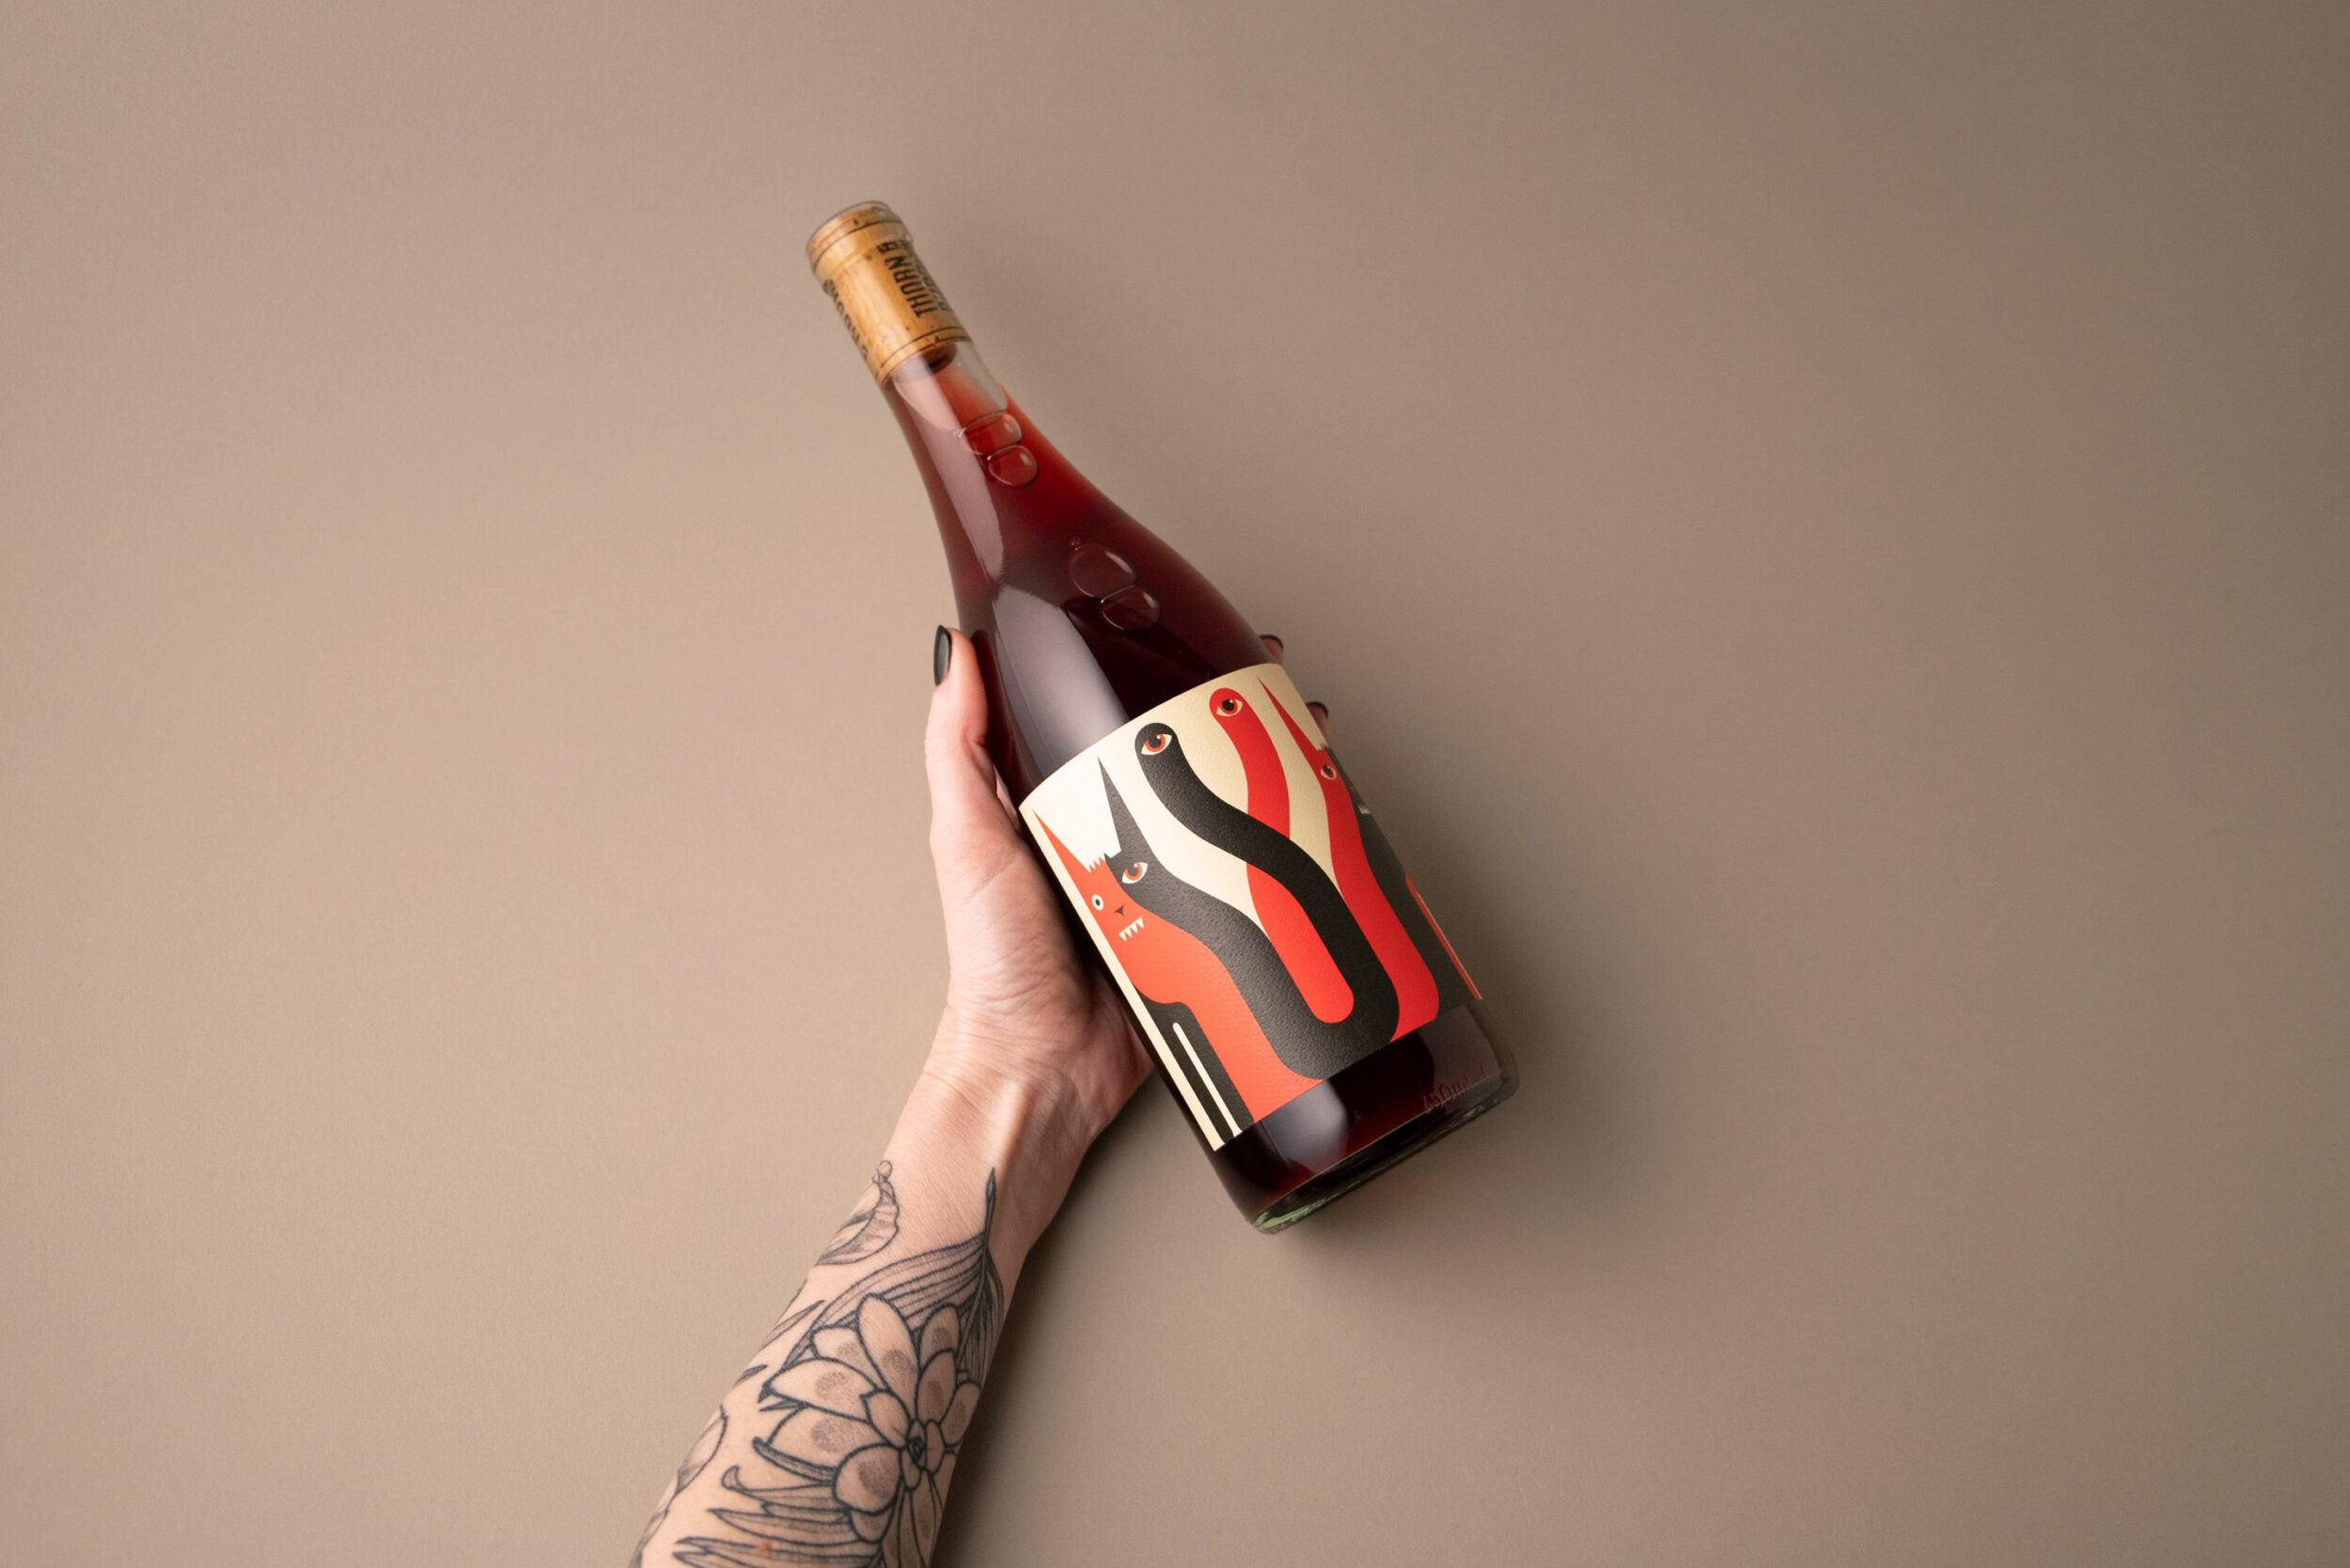 hand holding bottle of shiraz wine, arm has tattoos